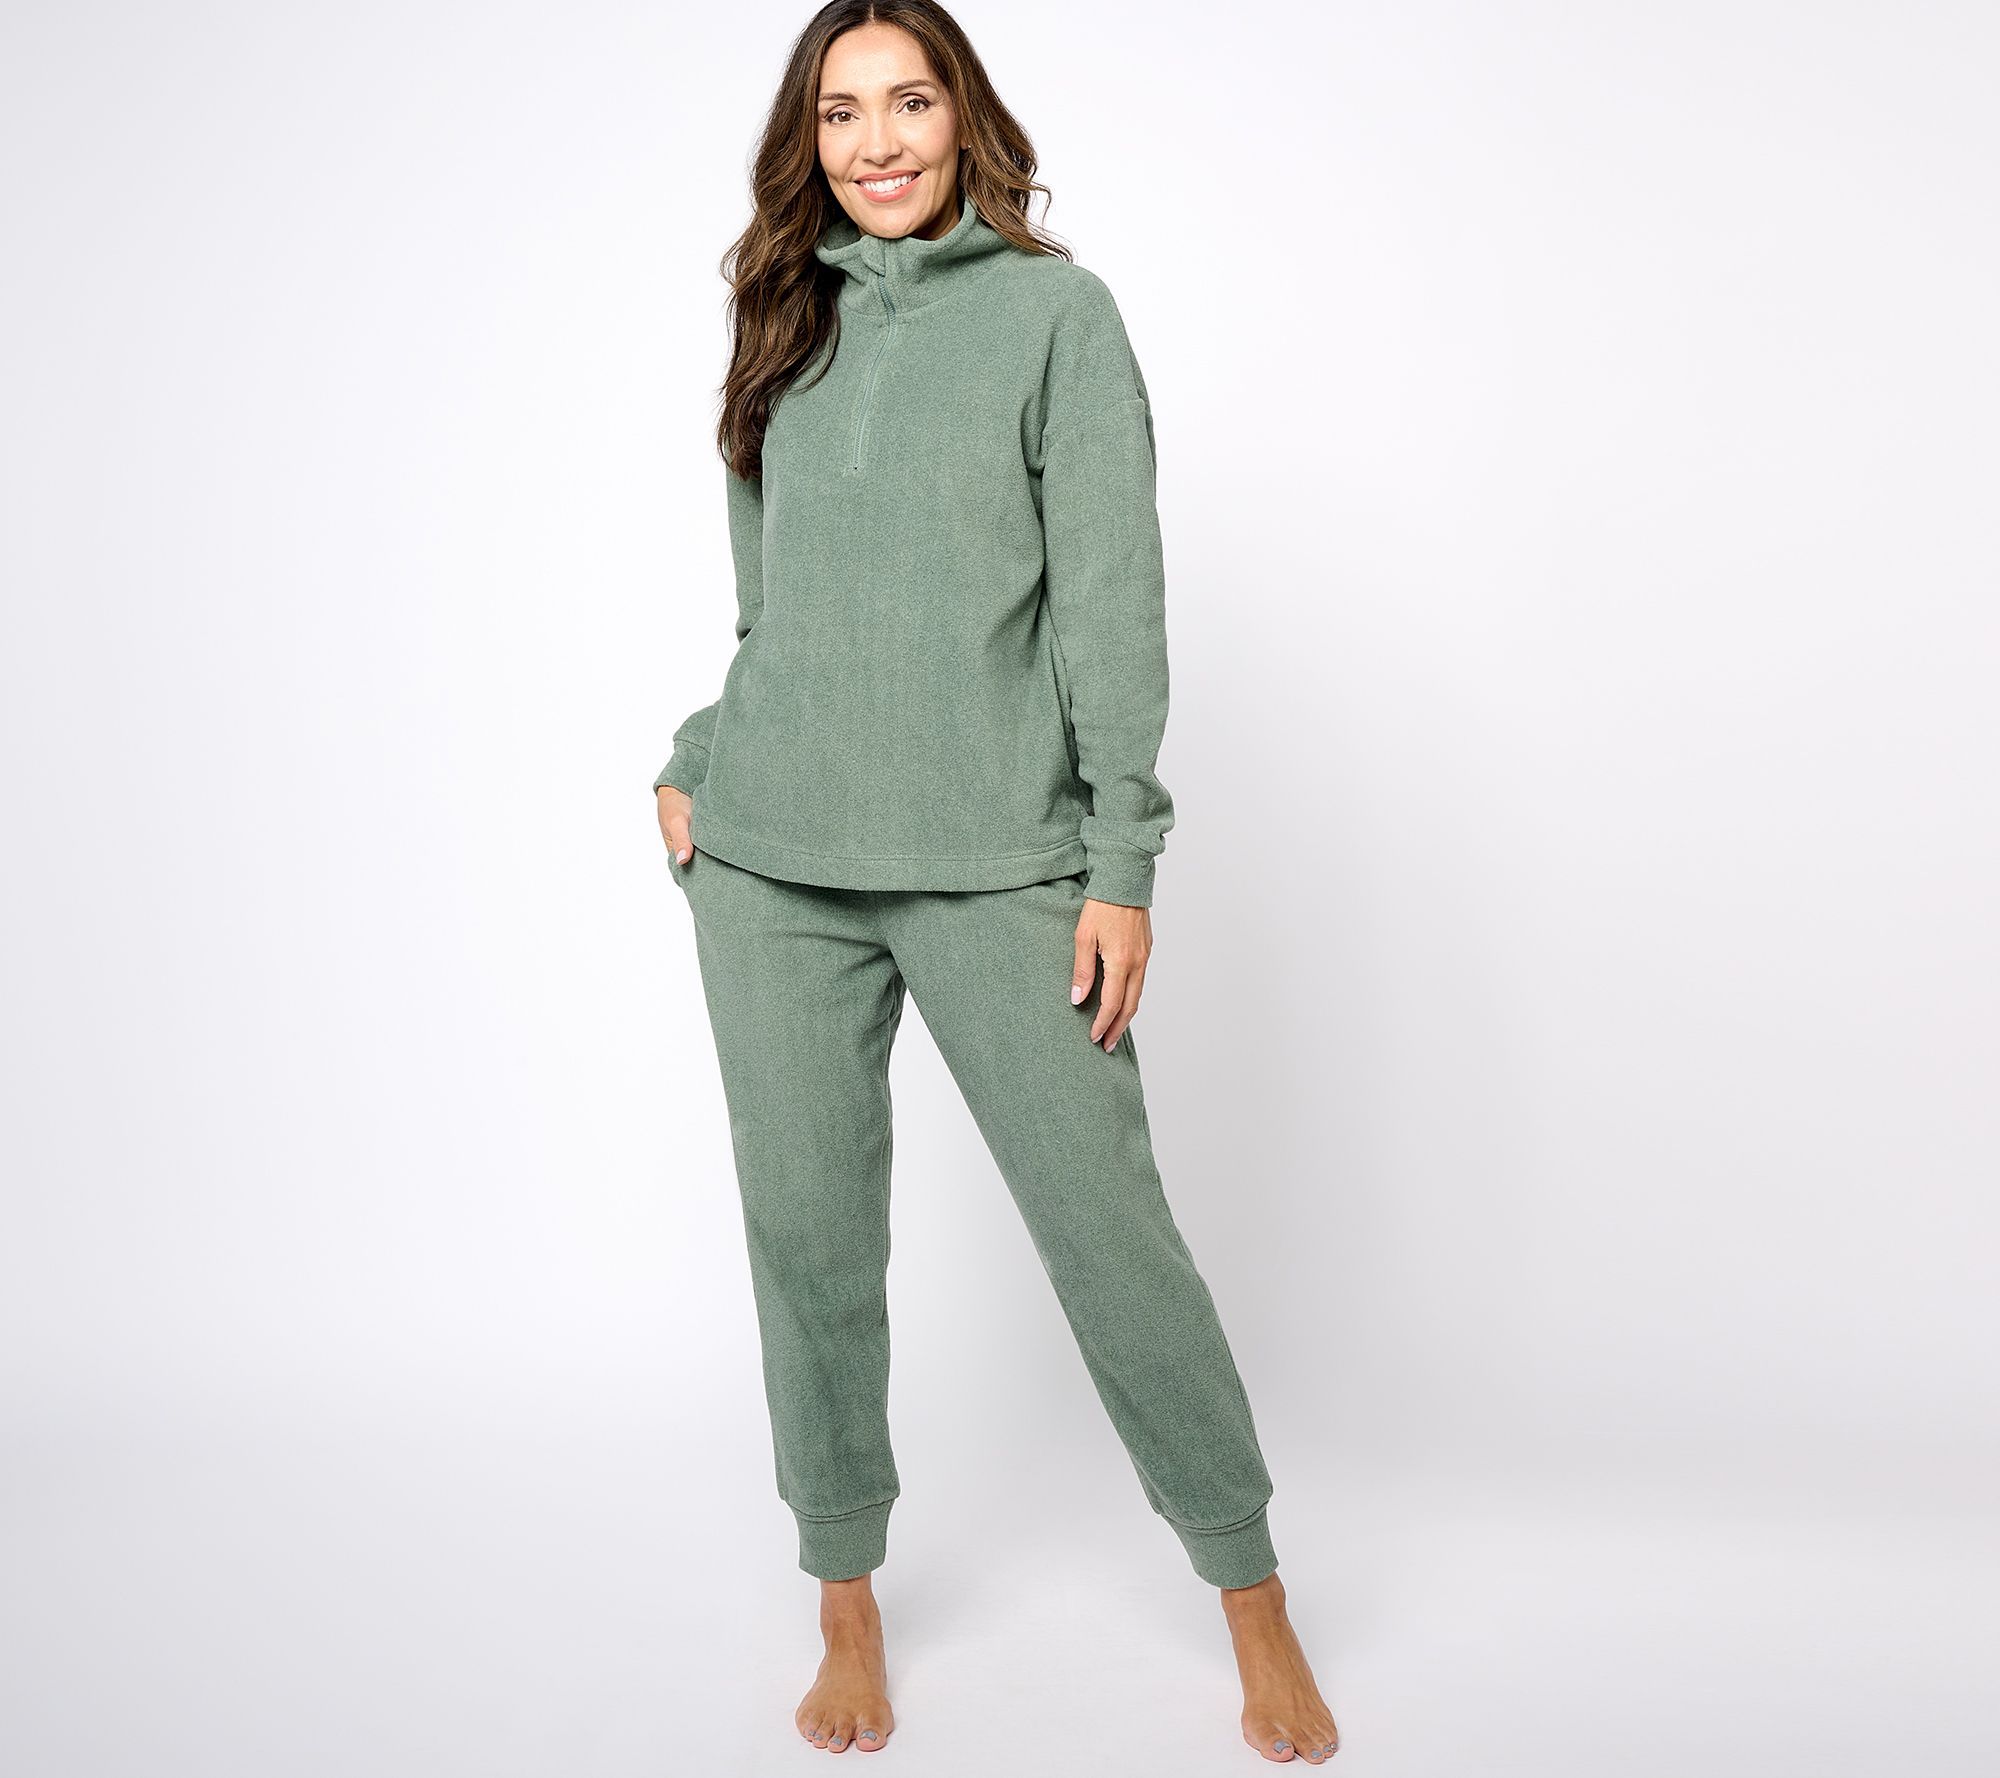 Berkshire Blanket Women's Top Sz XL Homewear Microfleece Half Zip Green A612908